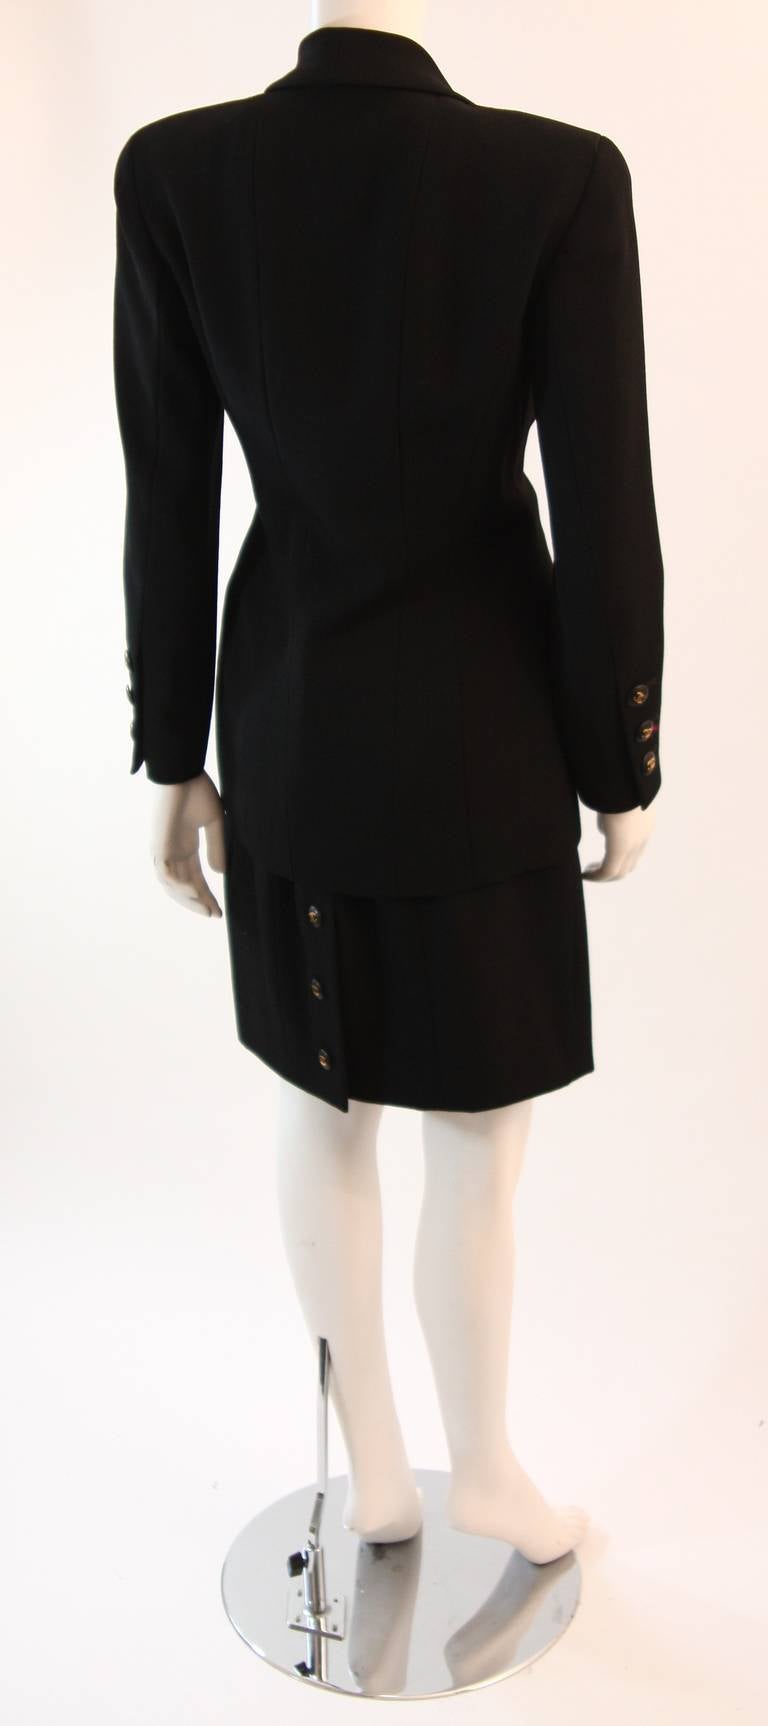 Marvelous Chanel Black Shawl Neck Skirt Suit Size 42 2